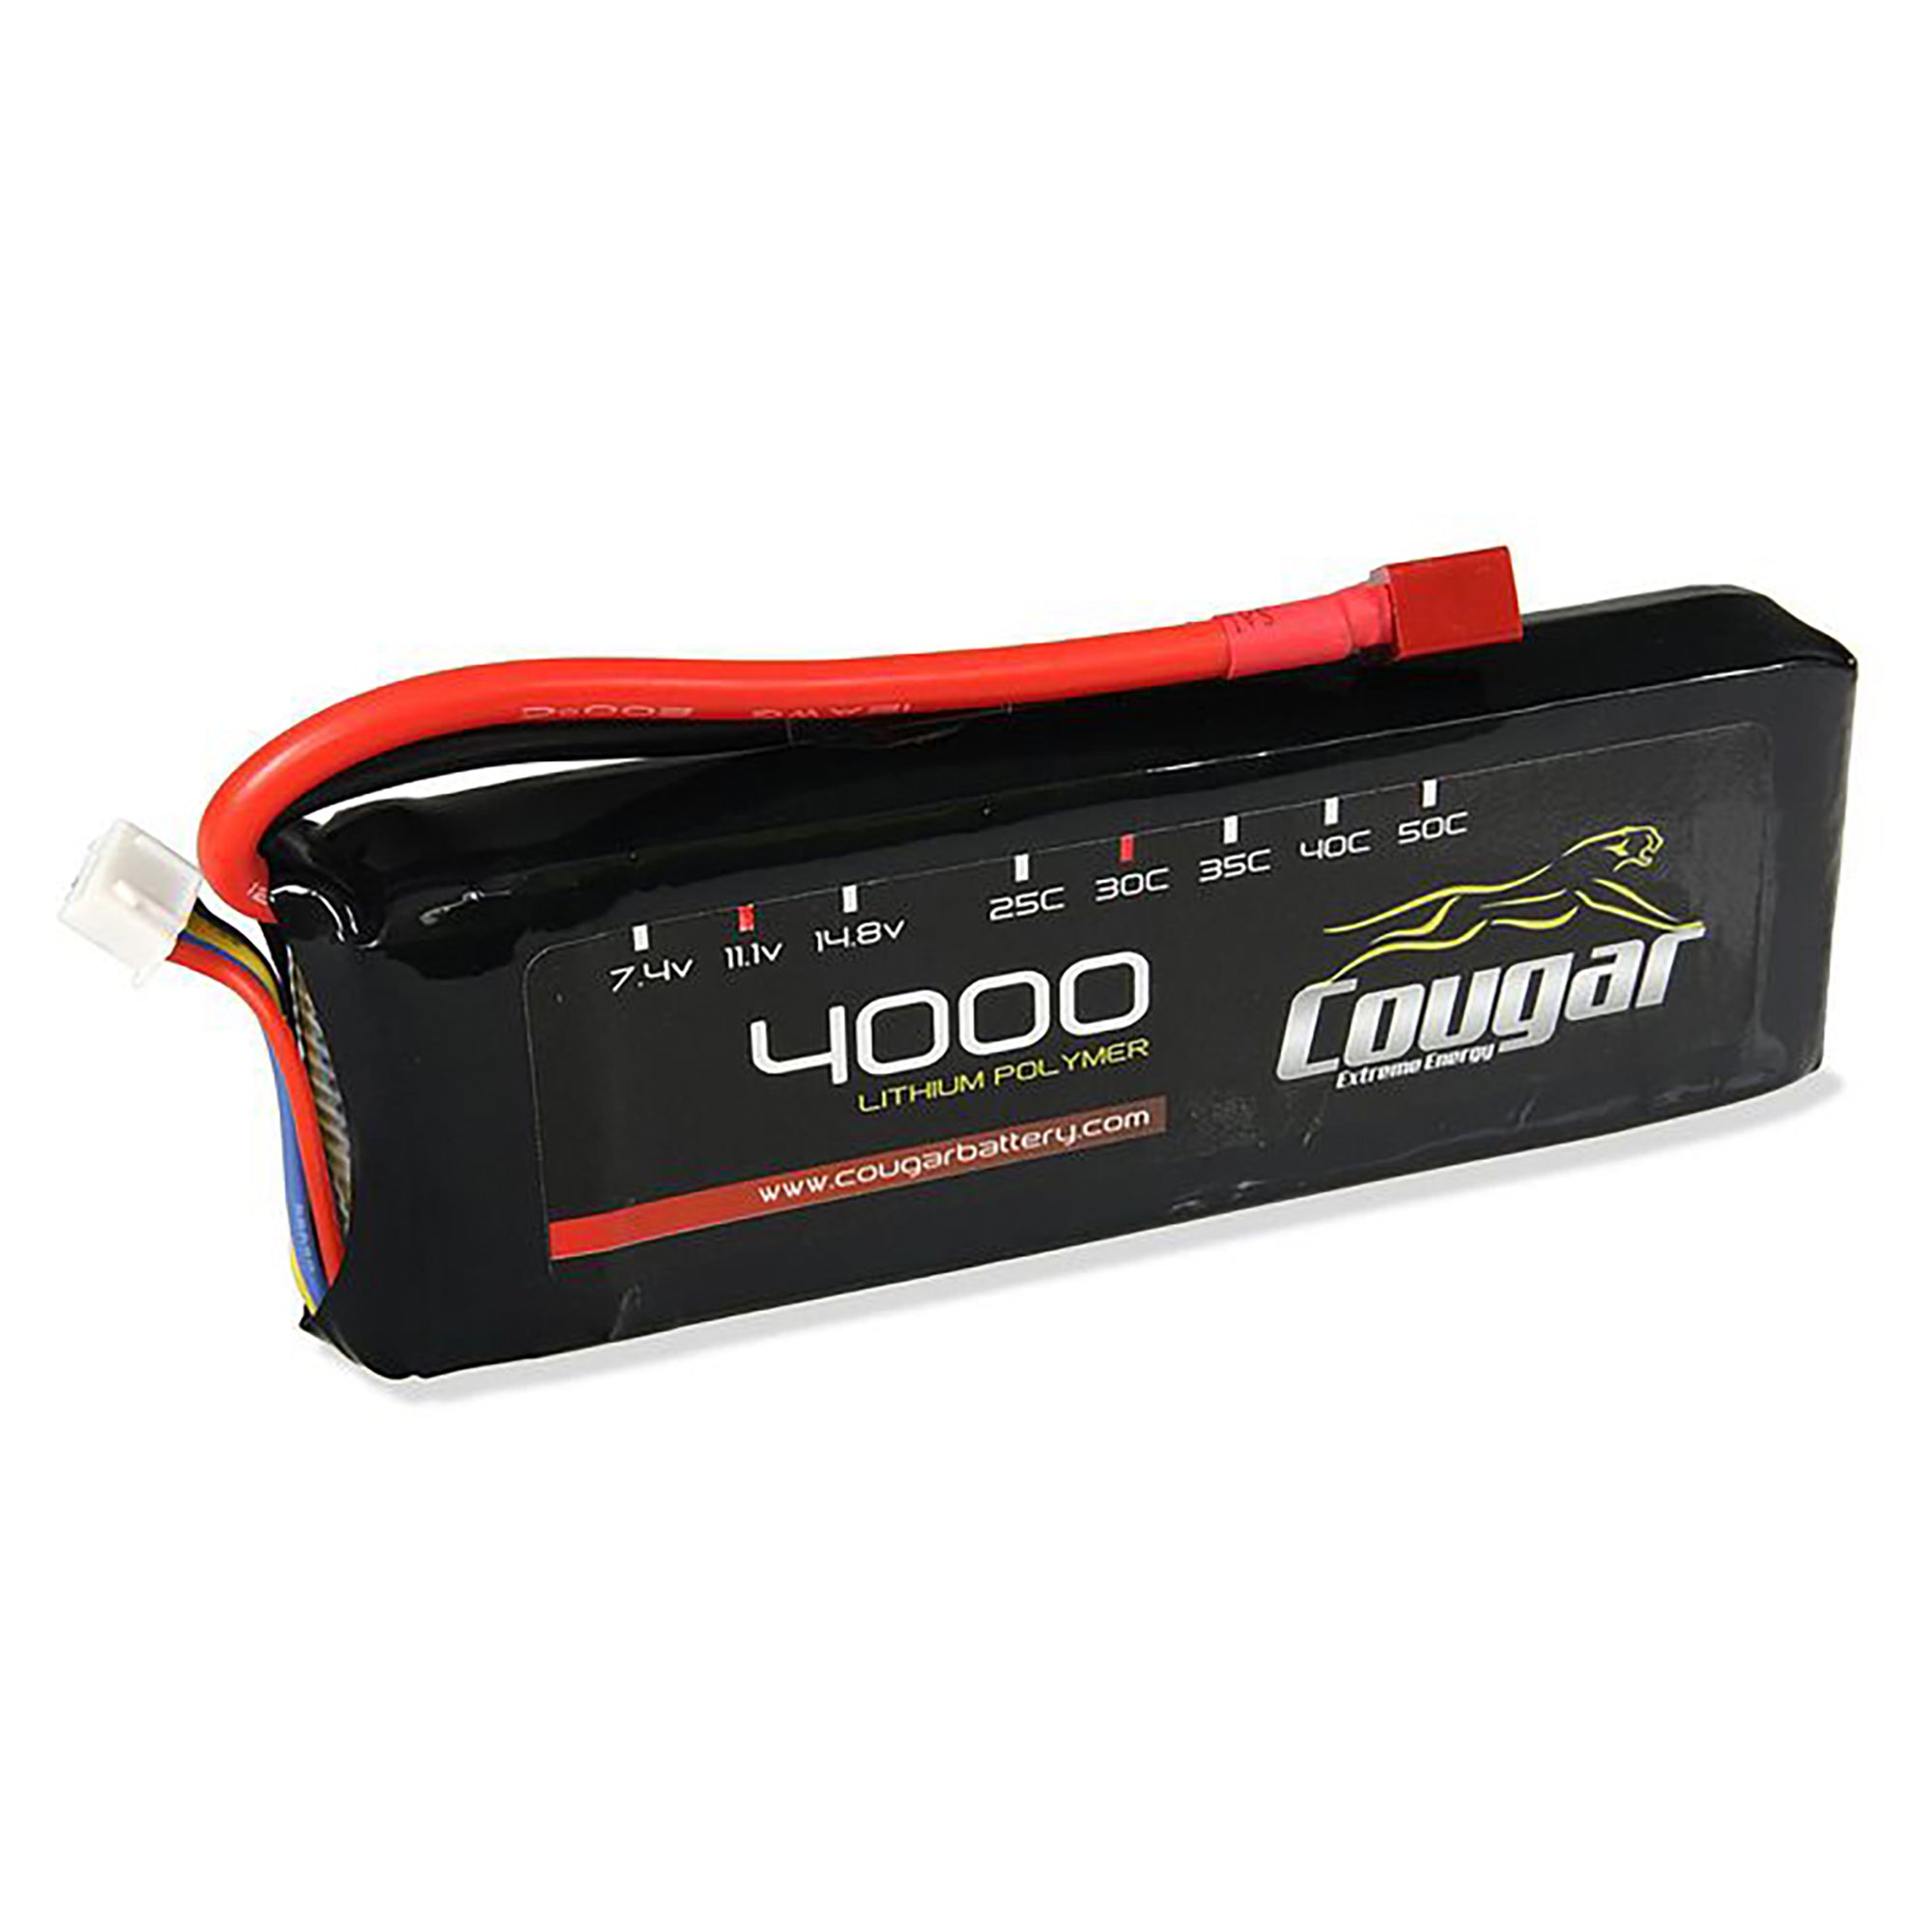 Cougar 4000mAh 11.1v 3S 30C Soft Case LiPo Battery